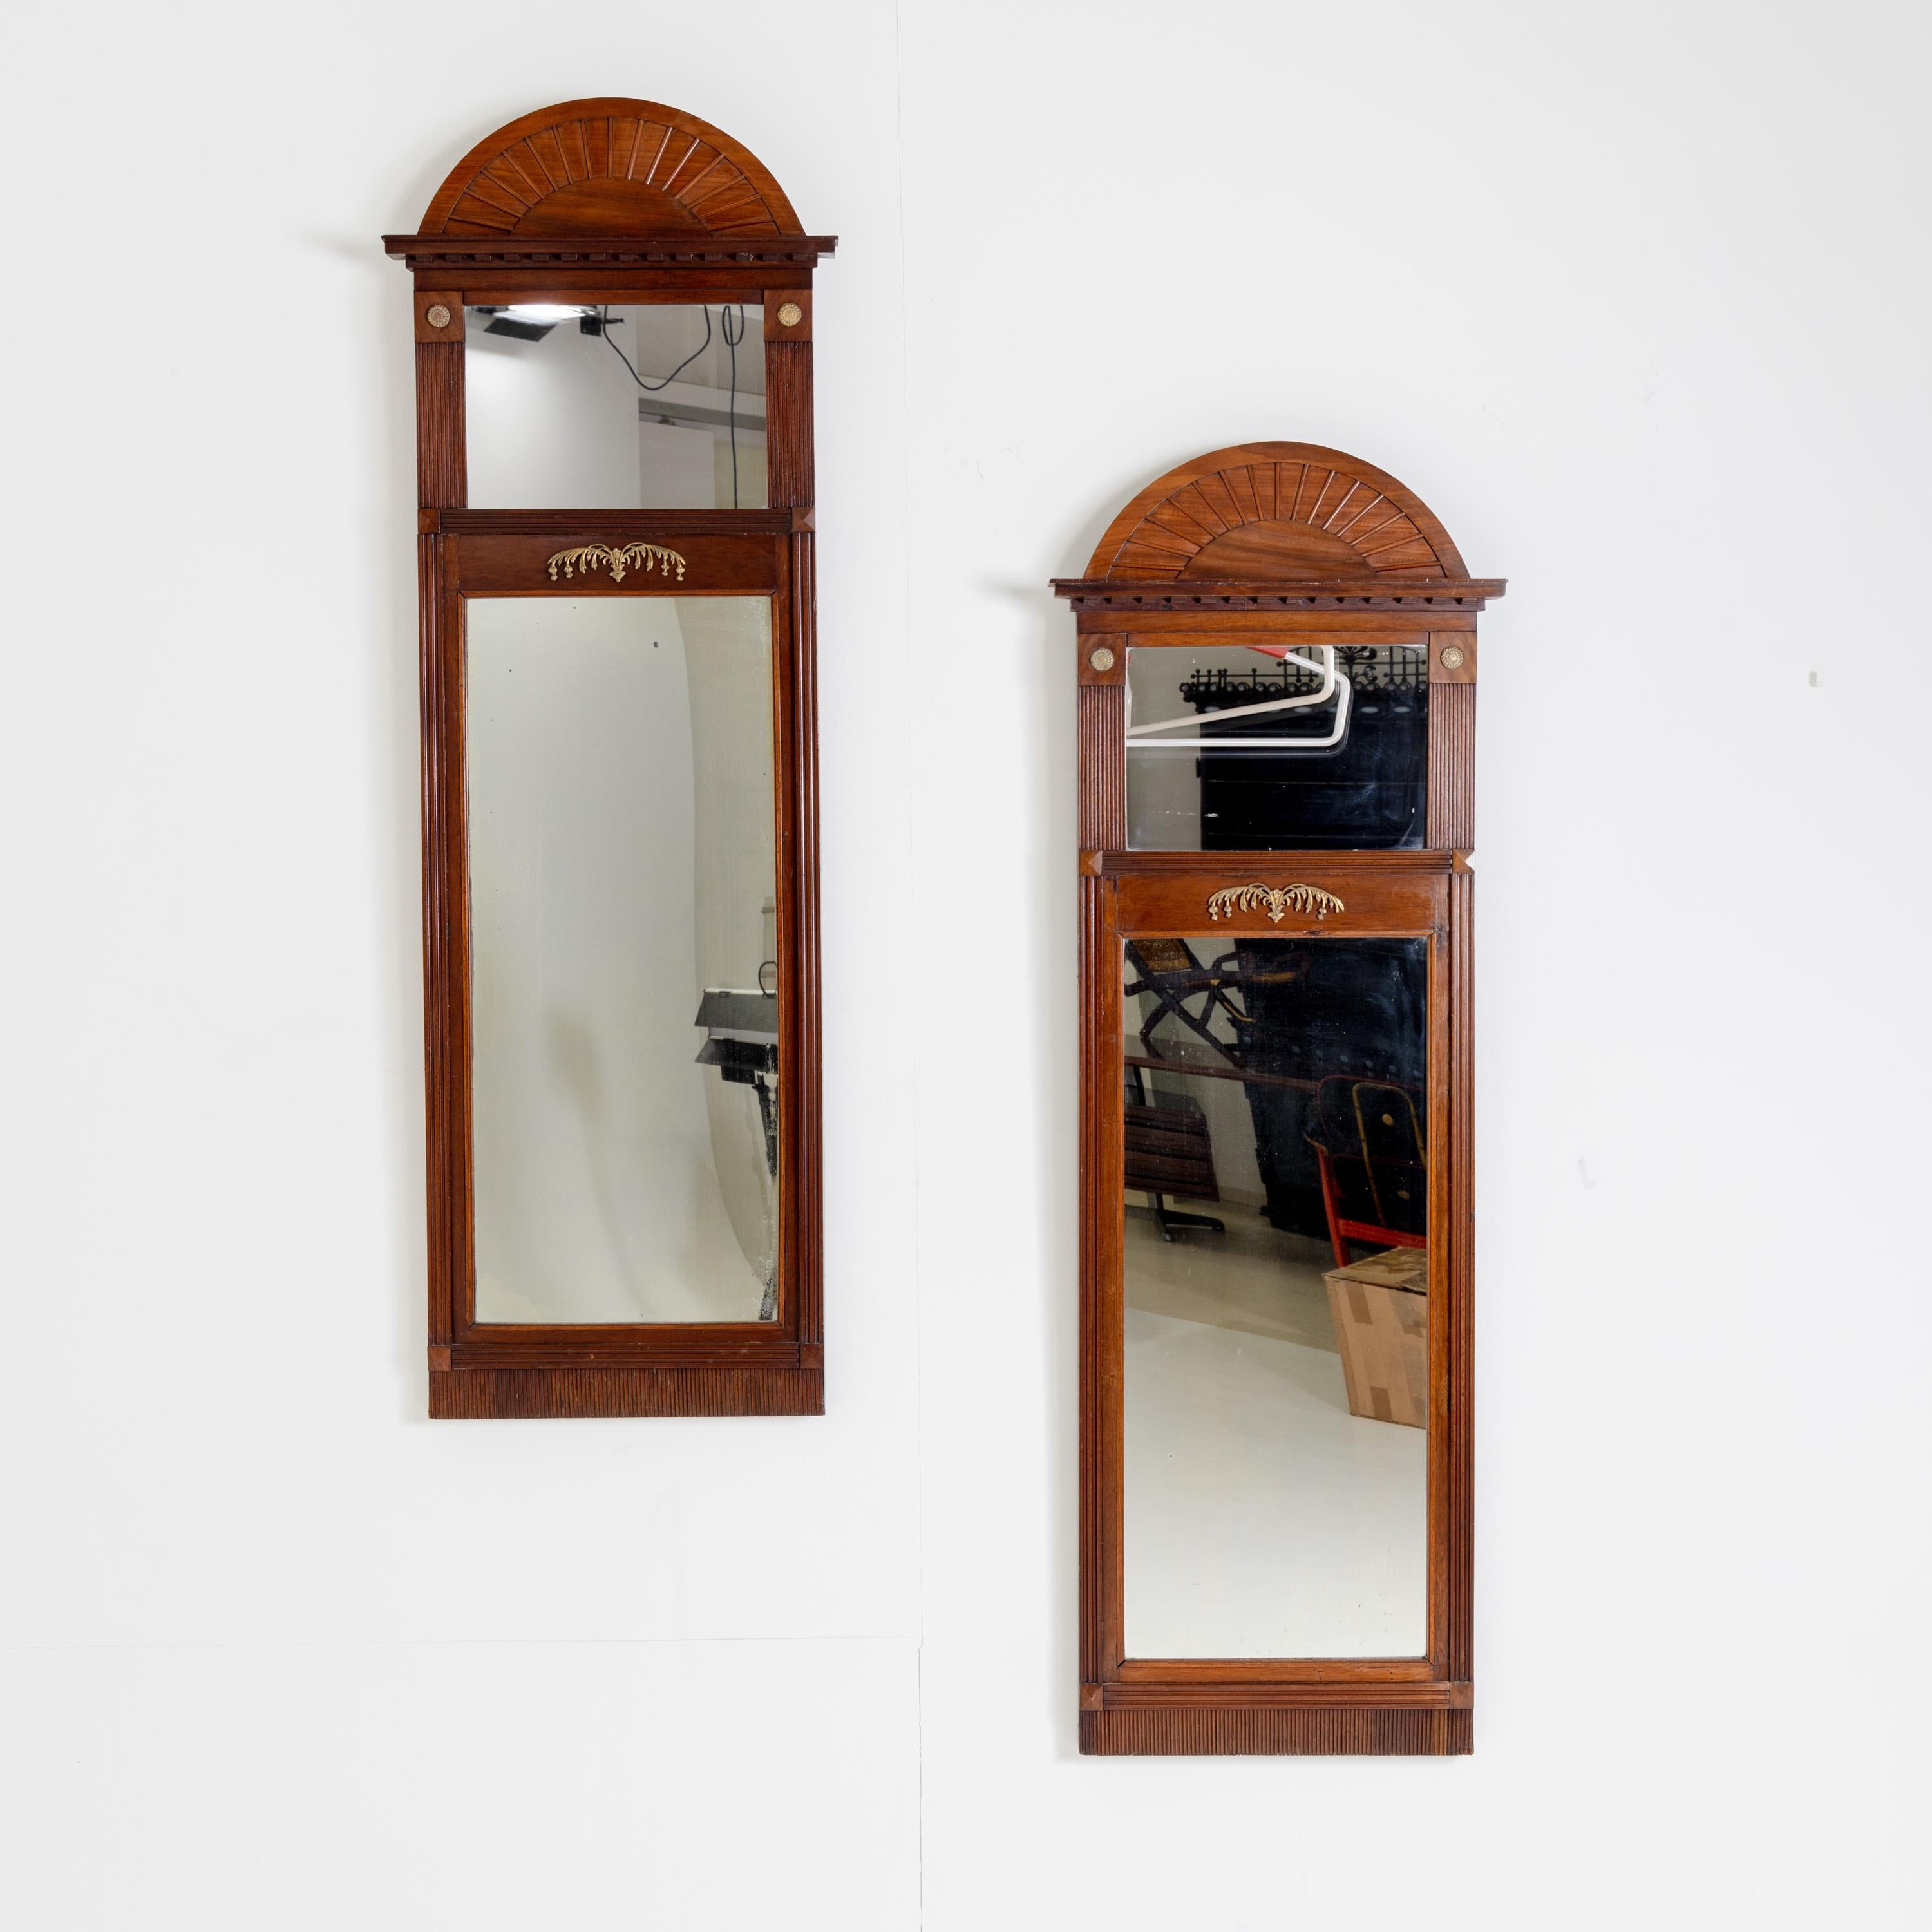 Pair of Danish wall mirrors with segmental pediments and fluted framing made of mahogany.